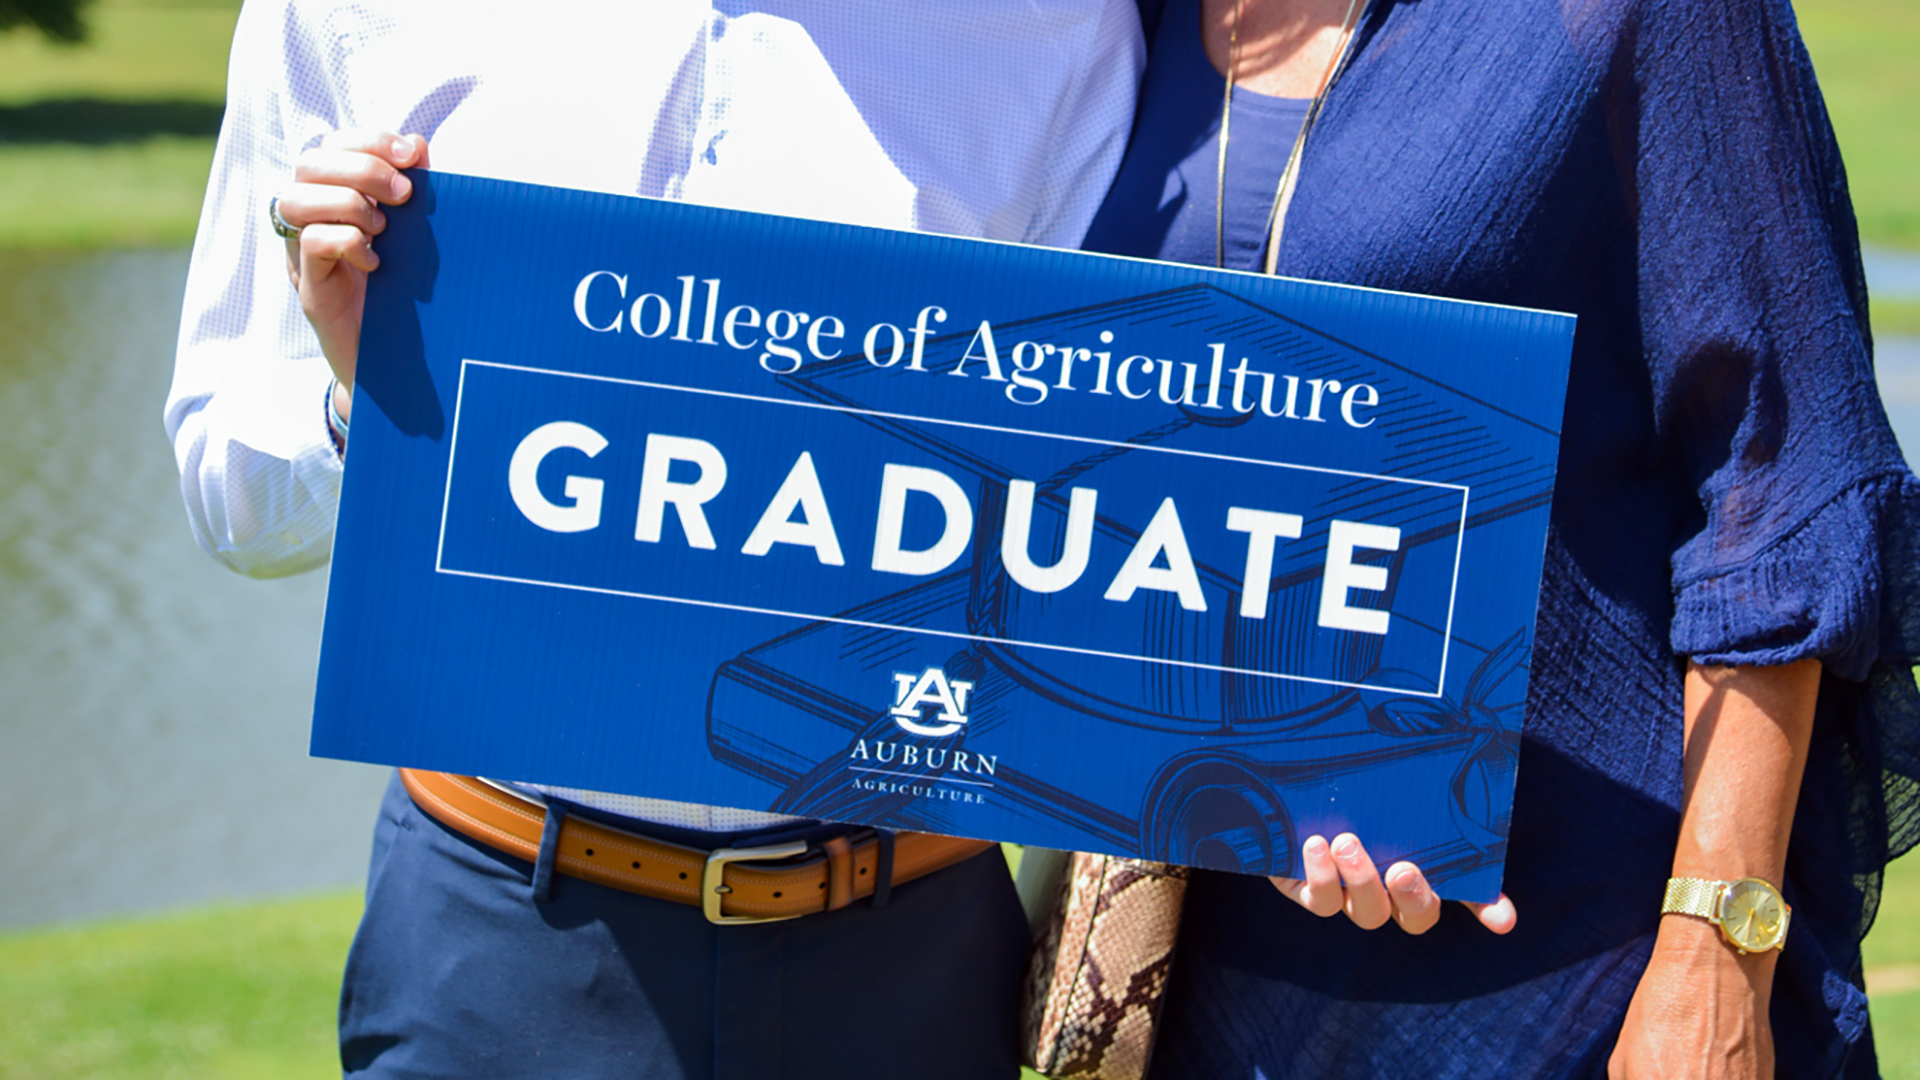 Auburn-University-College-of-Ag-Graduates-Congrats-Students-at-lake-front-leather-belt-snake-skin-purse-gold-jewelry-Alabama-hot-sun-water-2022